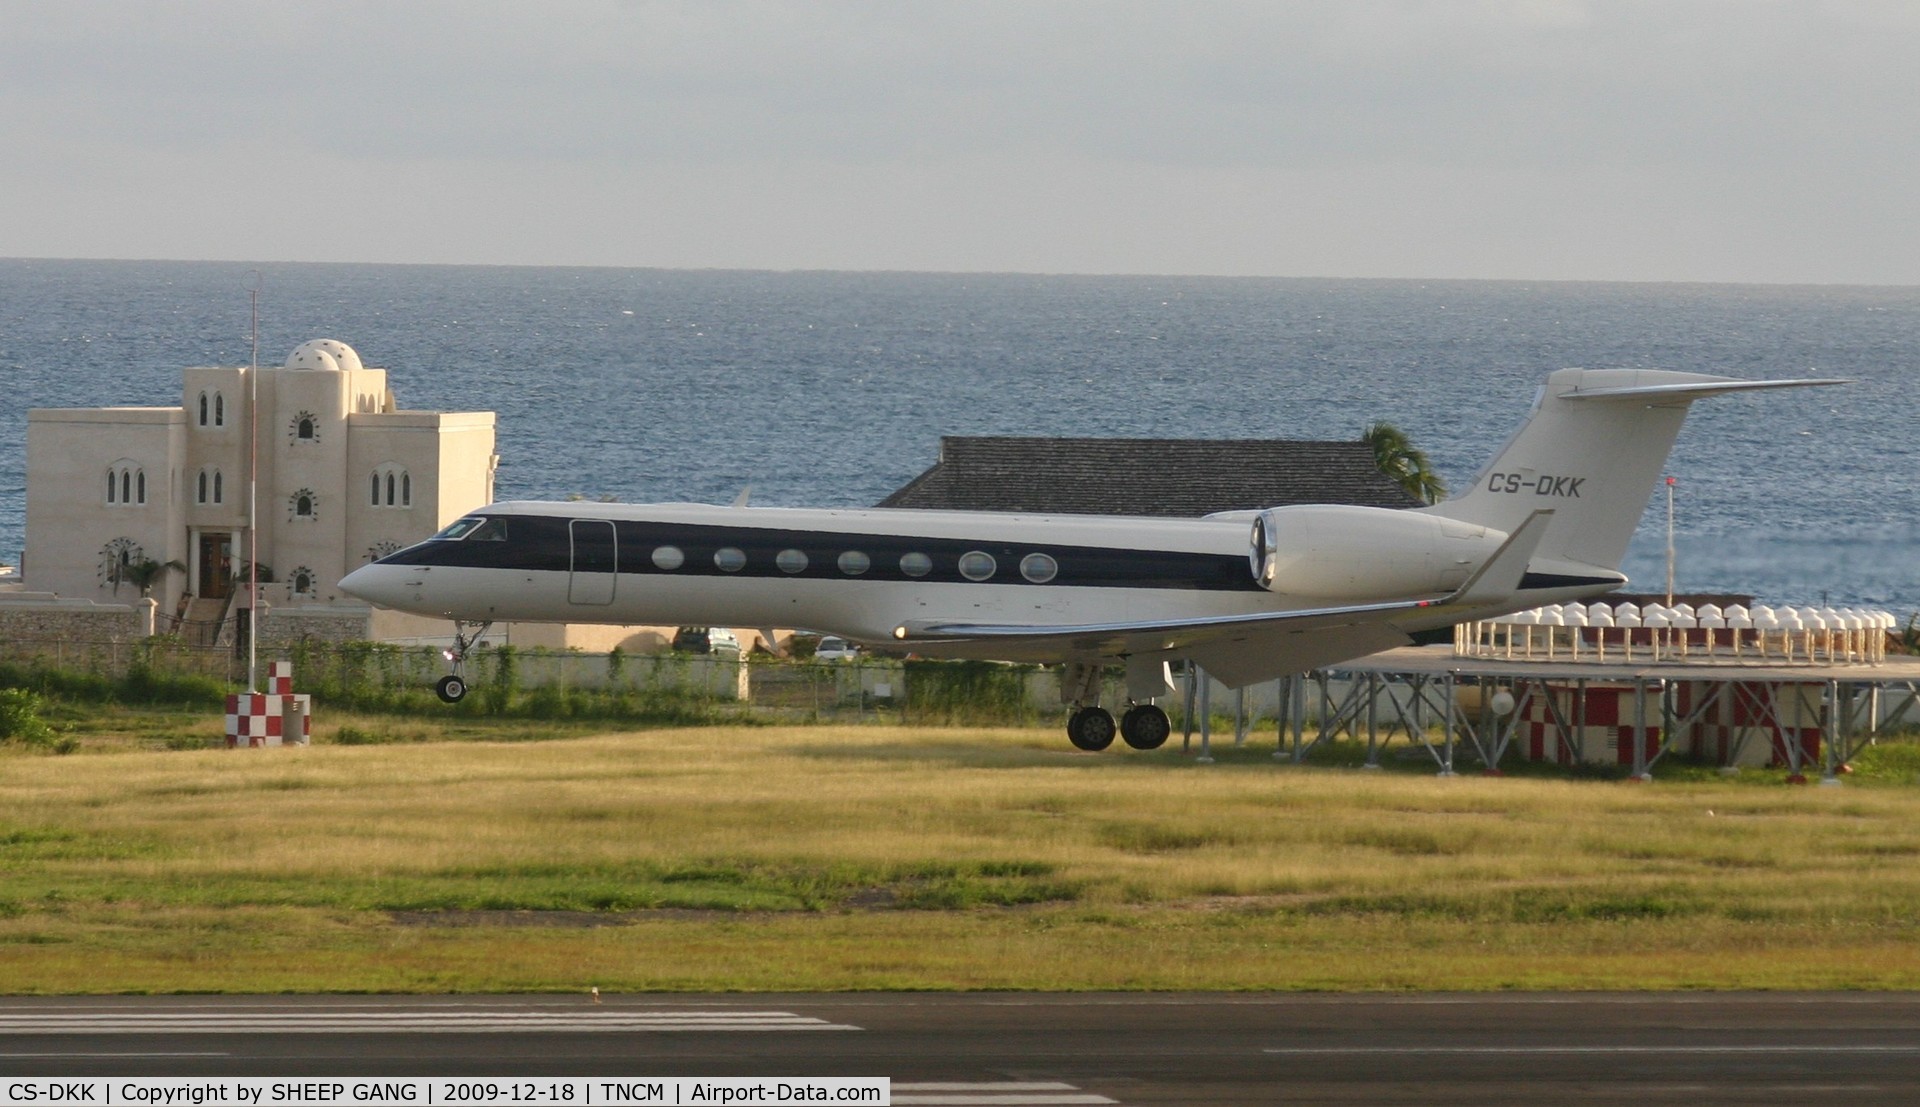 CS-DKK, 2008 Gulfstream Aerospace GV-SP (G550) C/N 5201, CS-DKK landing at tncm